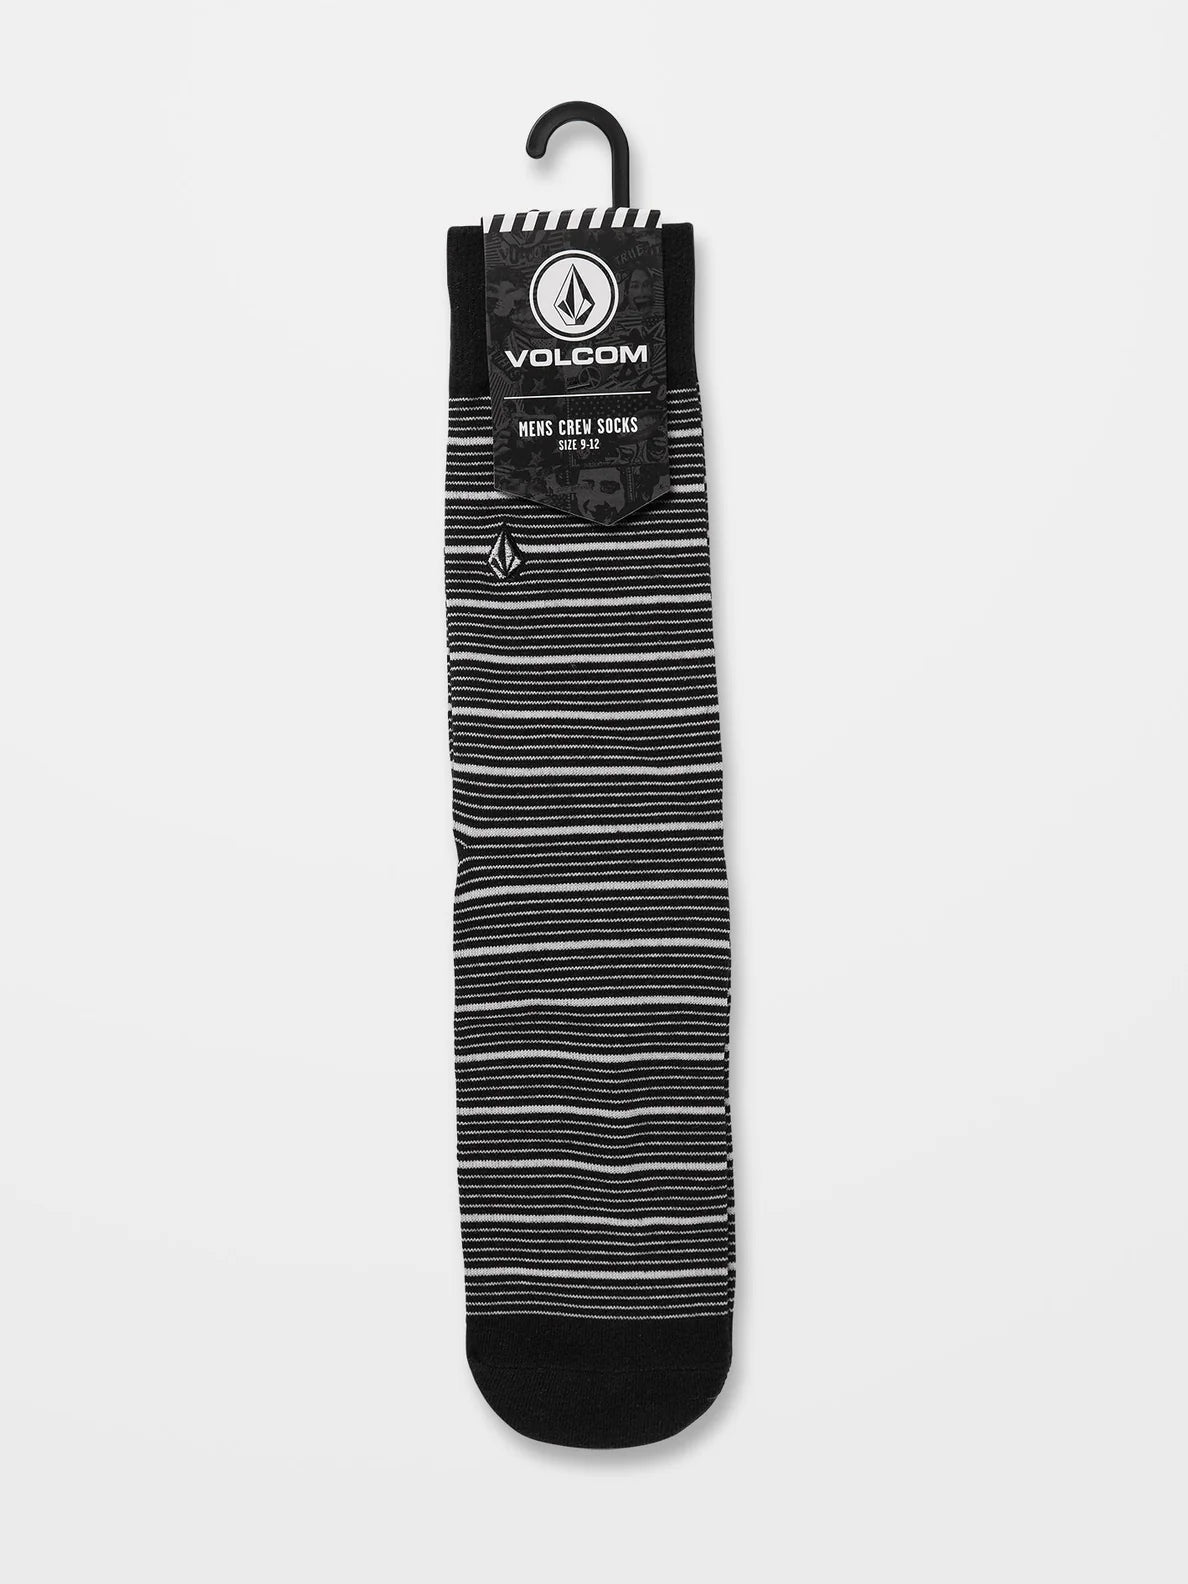 Volcom True Sock PR Whitecap grau